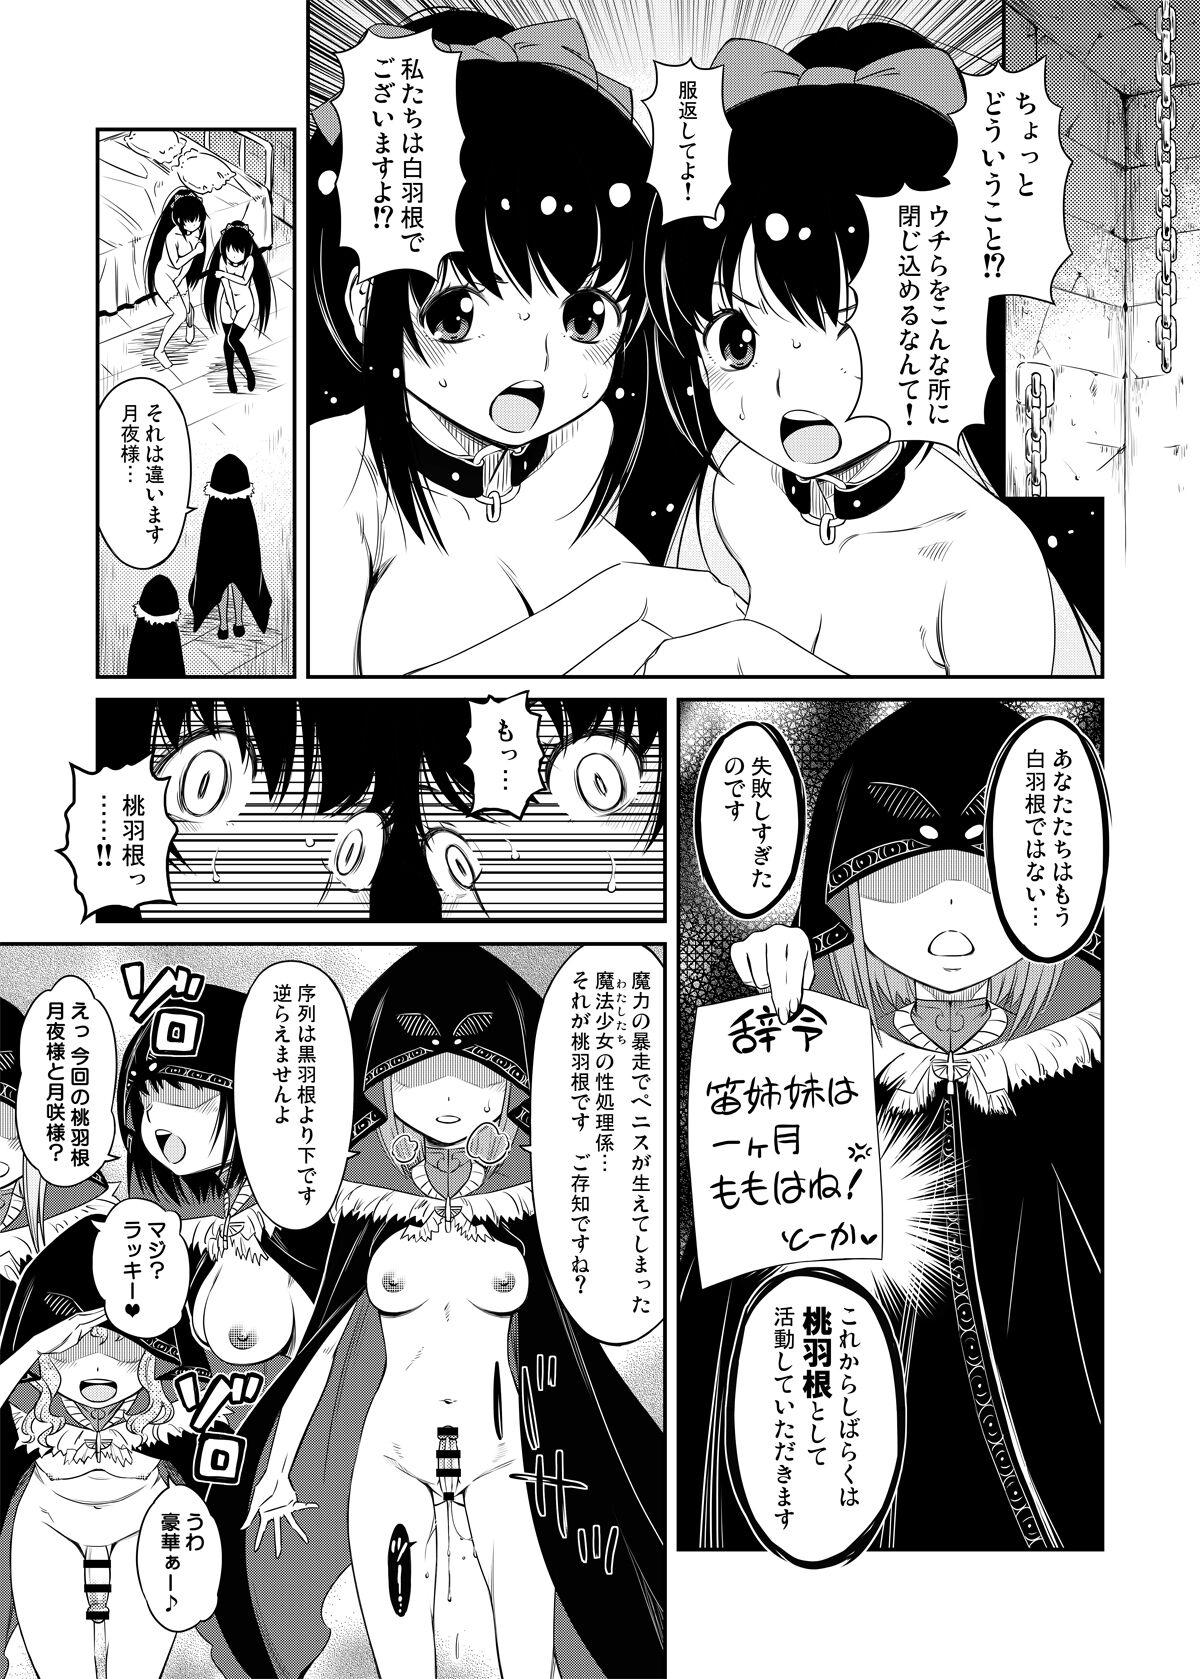 Nudity The Amane sisters' Erotic Manga - Puella magi madoka magica side story magia record Cock - Picture 1